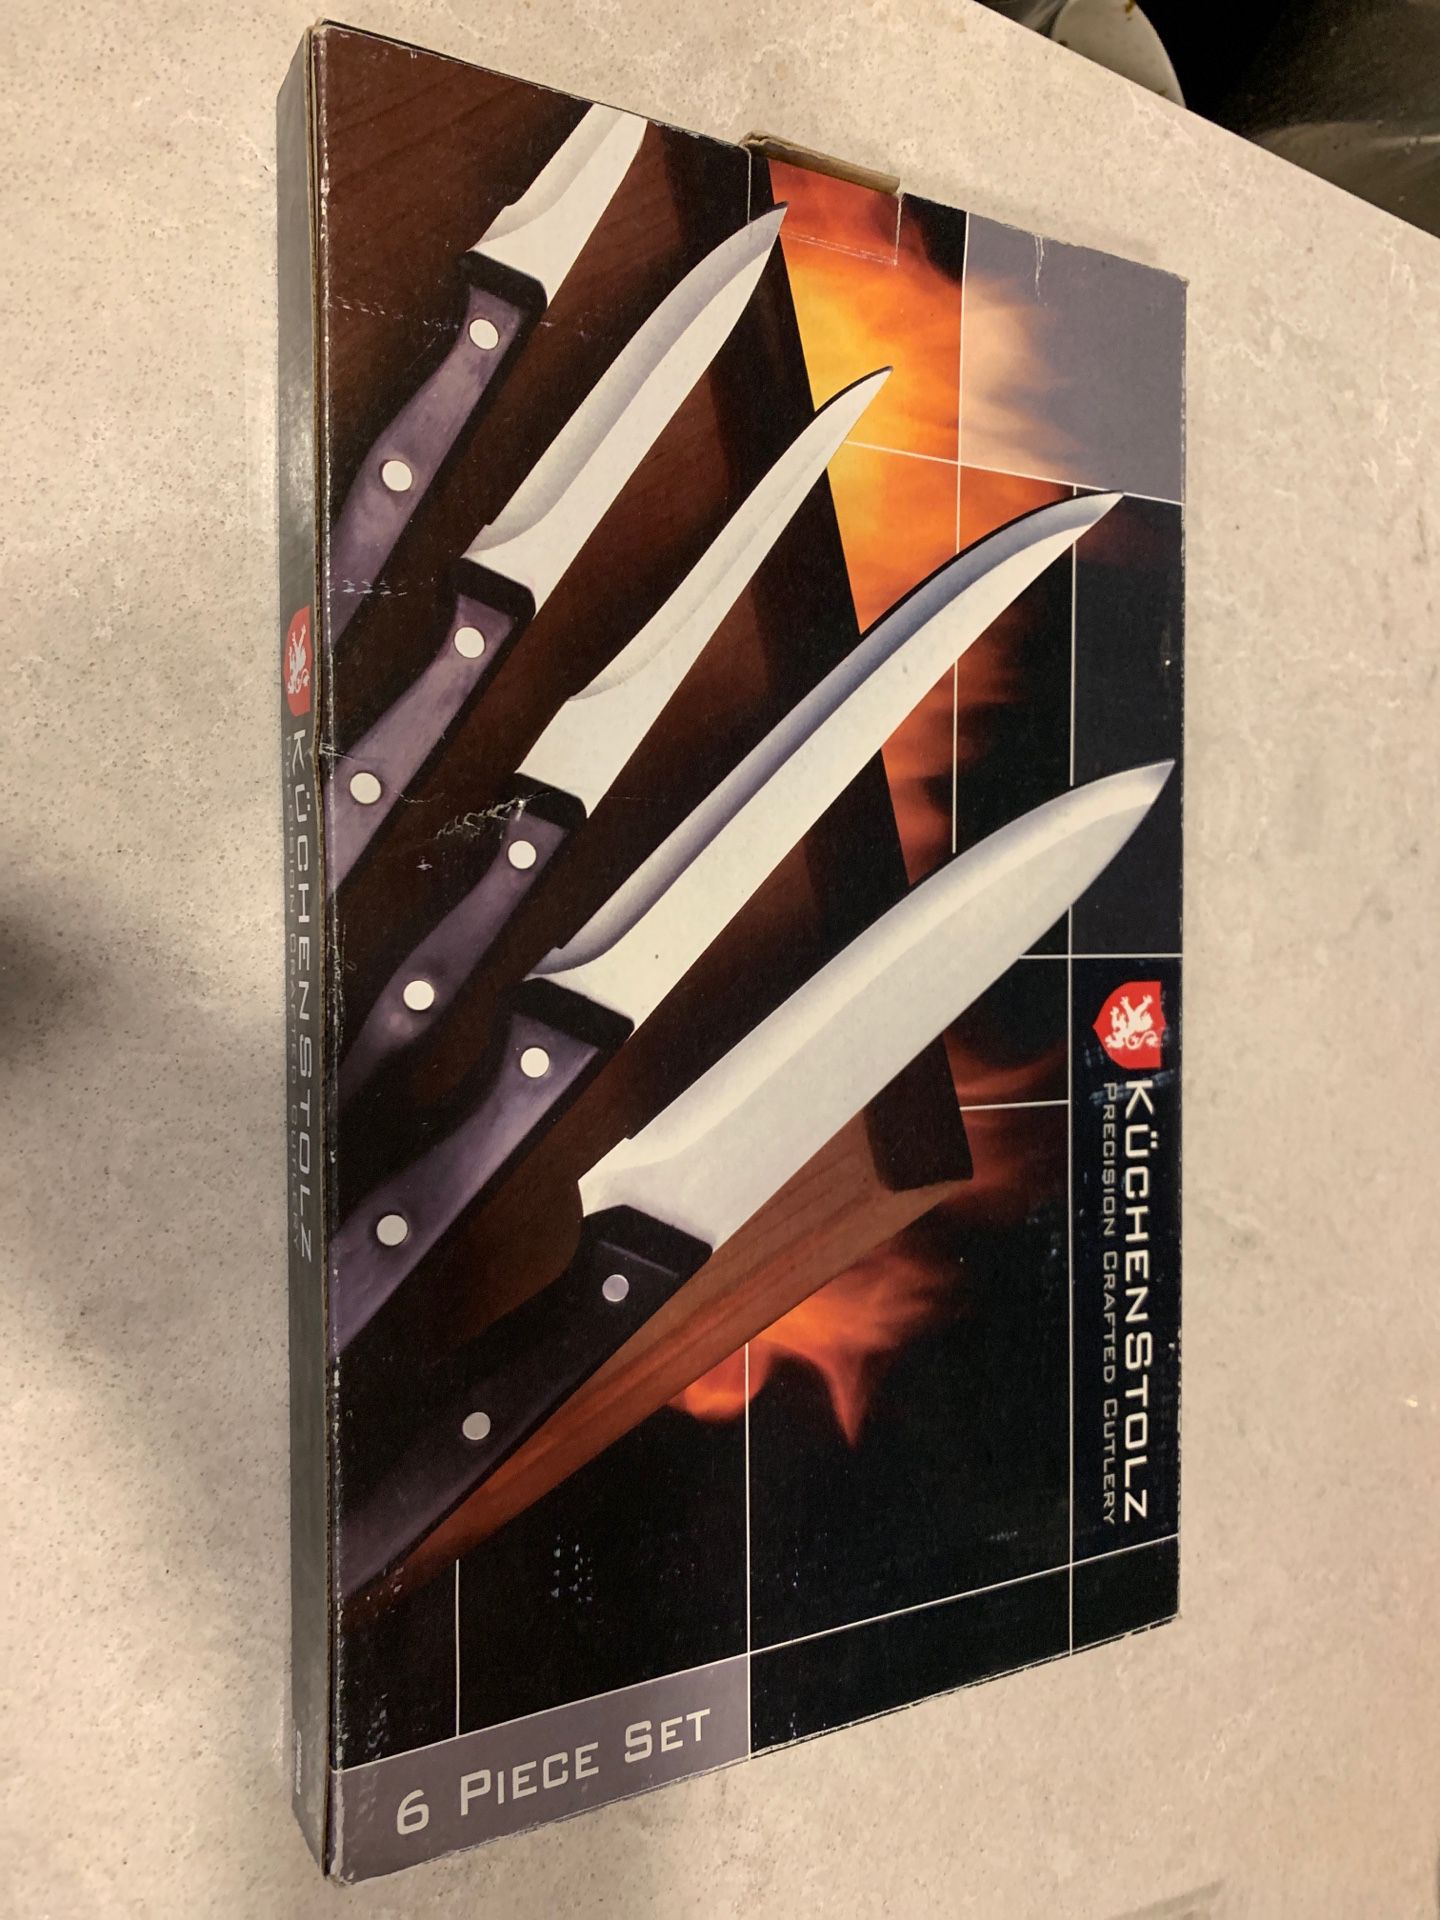 Knife Sets for sale in B N Junction, Kansas